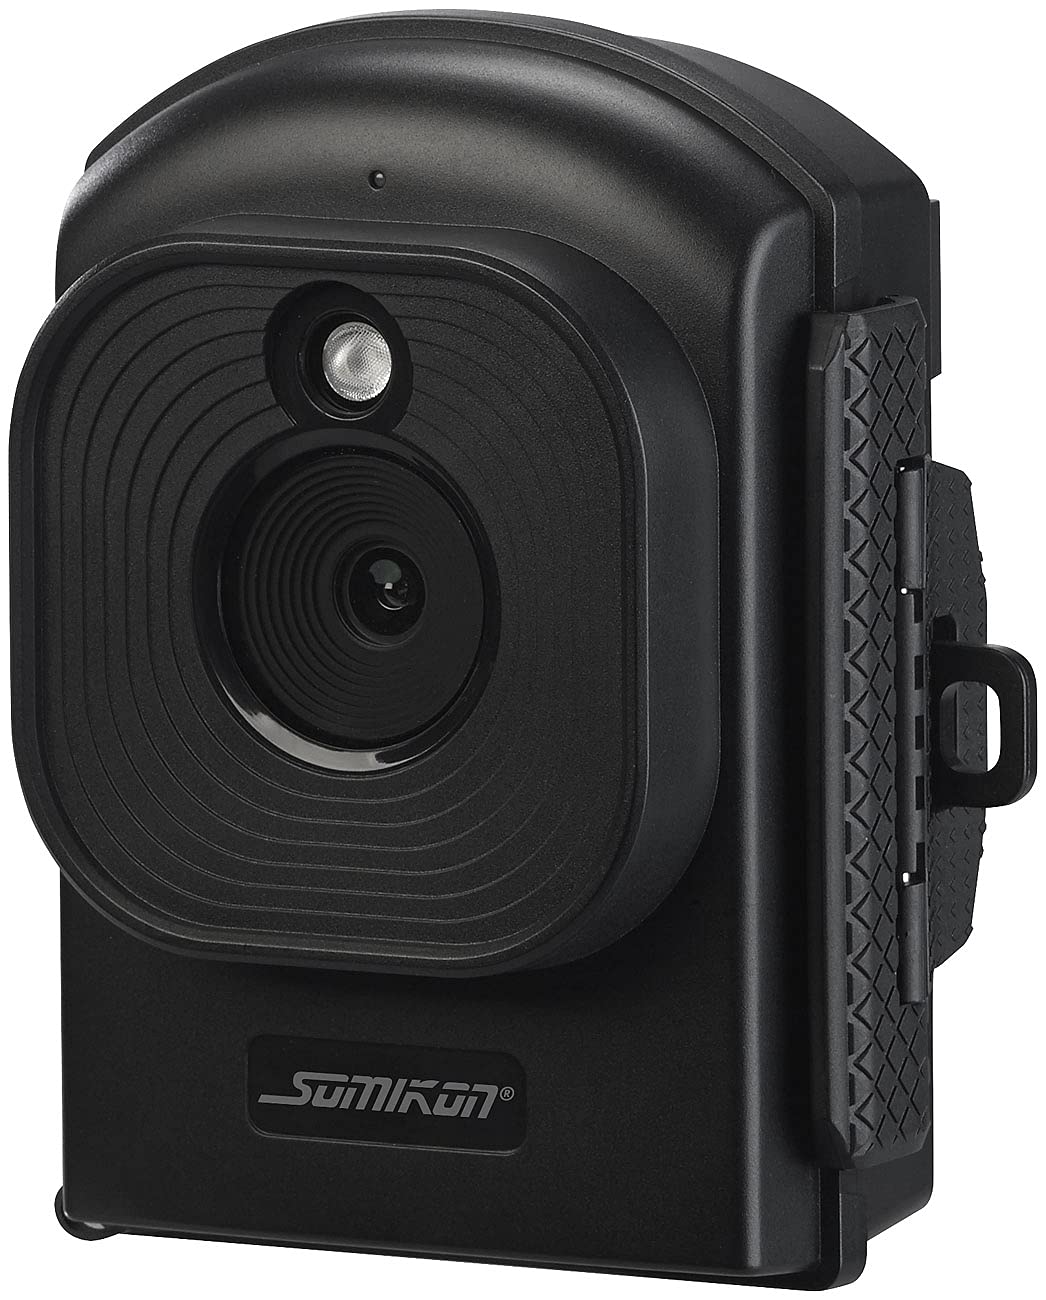 Somikon Baustellenkamera: Full-HD-Zeitraffer-Kamera, 1080p, 1 Jahr Laufzeit, Stativ, 120°, IP66 (Digitalkamera, Überwachungskamera Zeitraffer, Camera Baustelle)